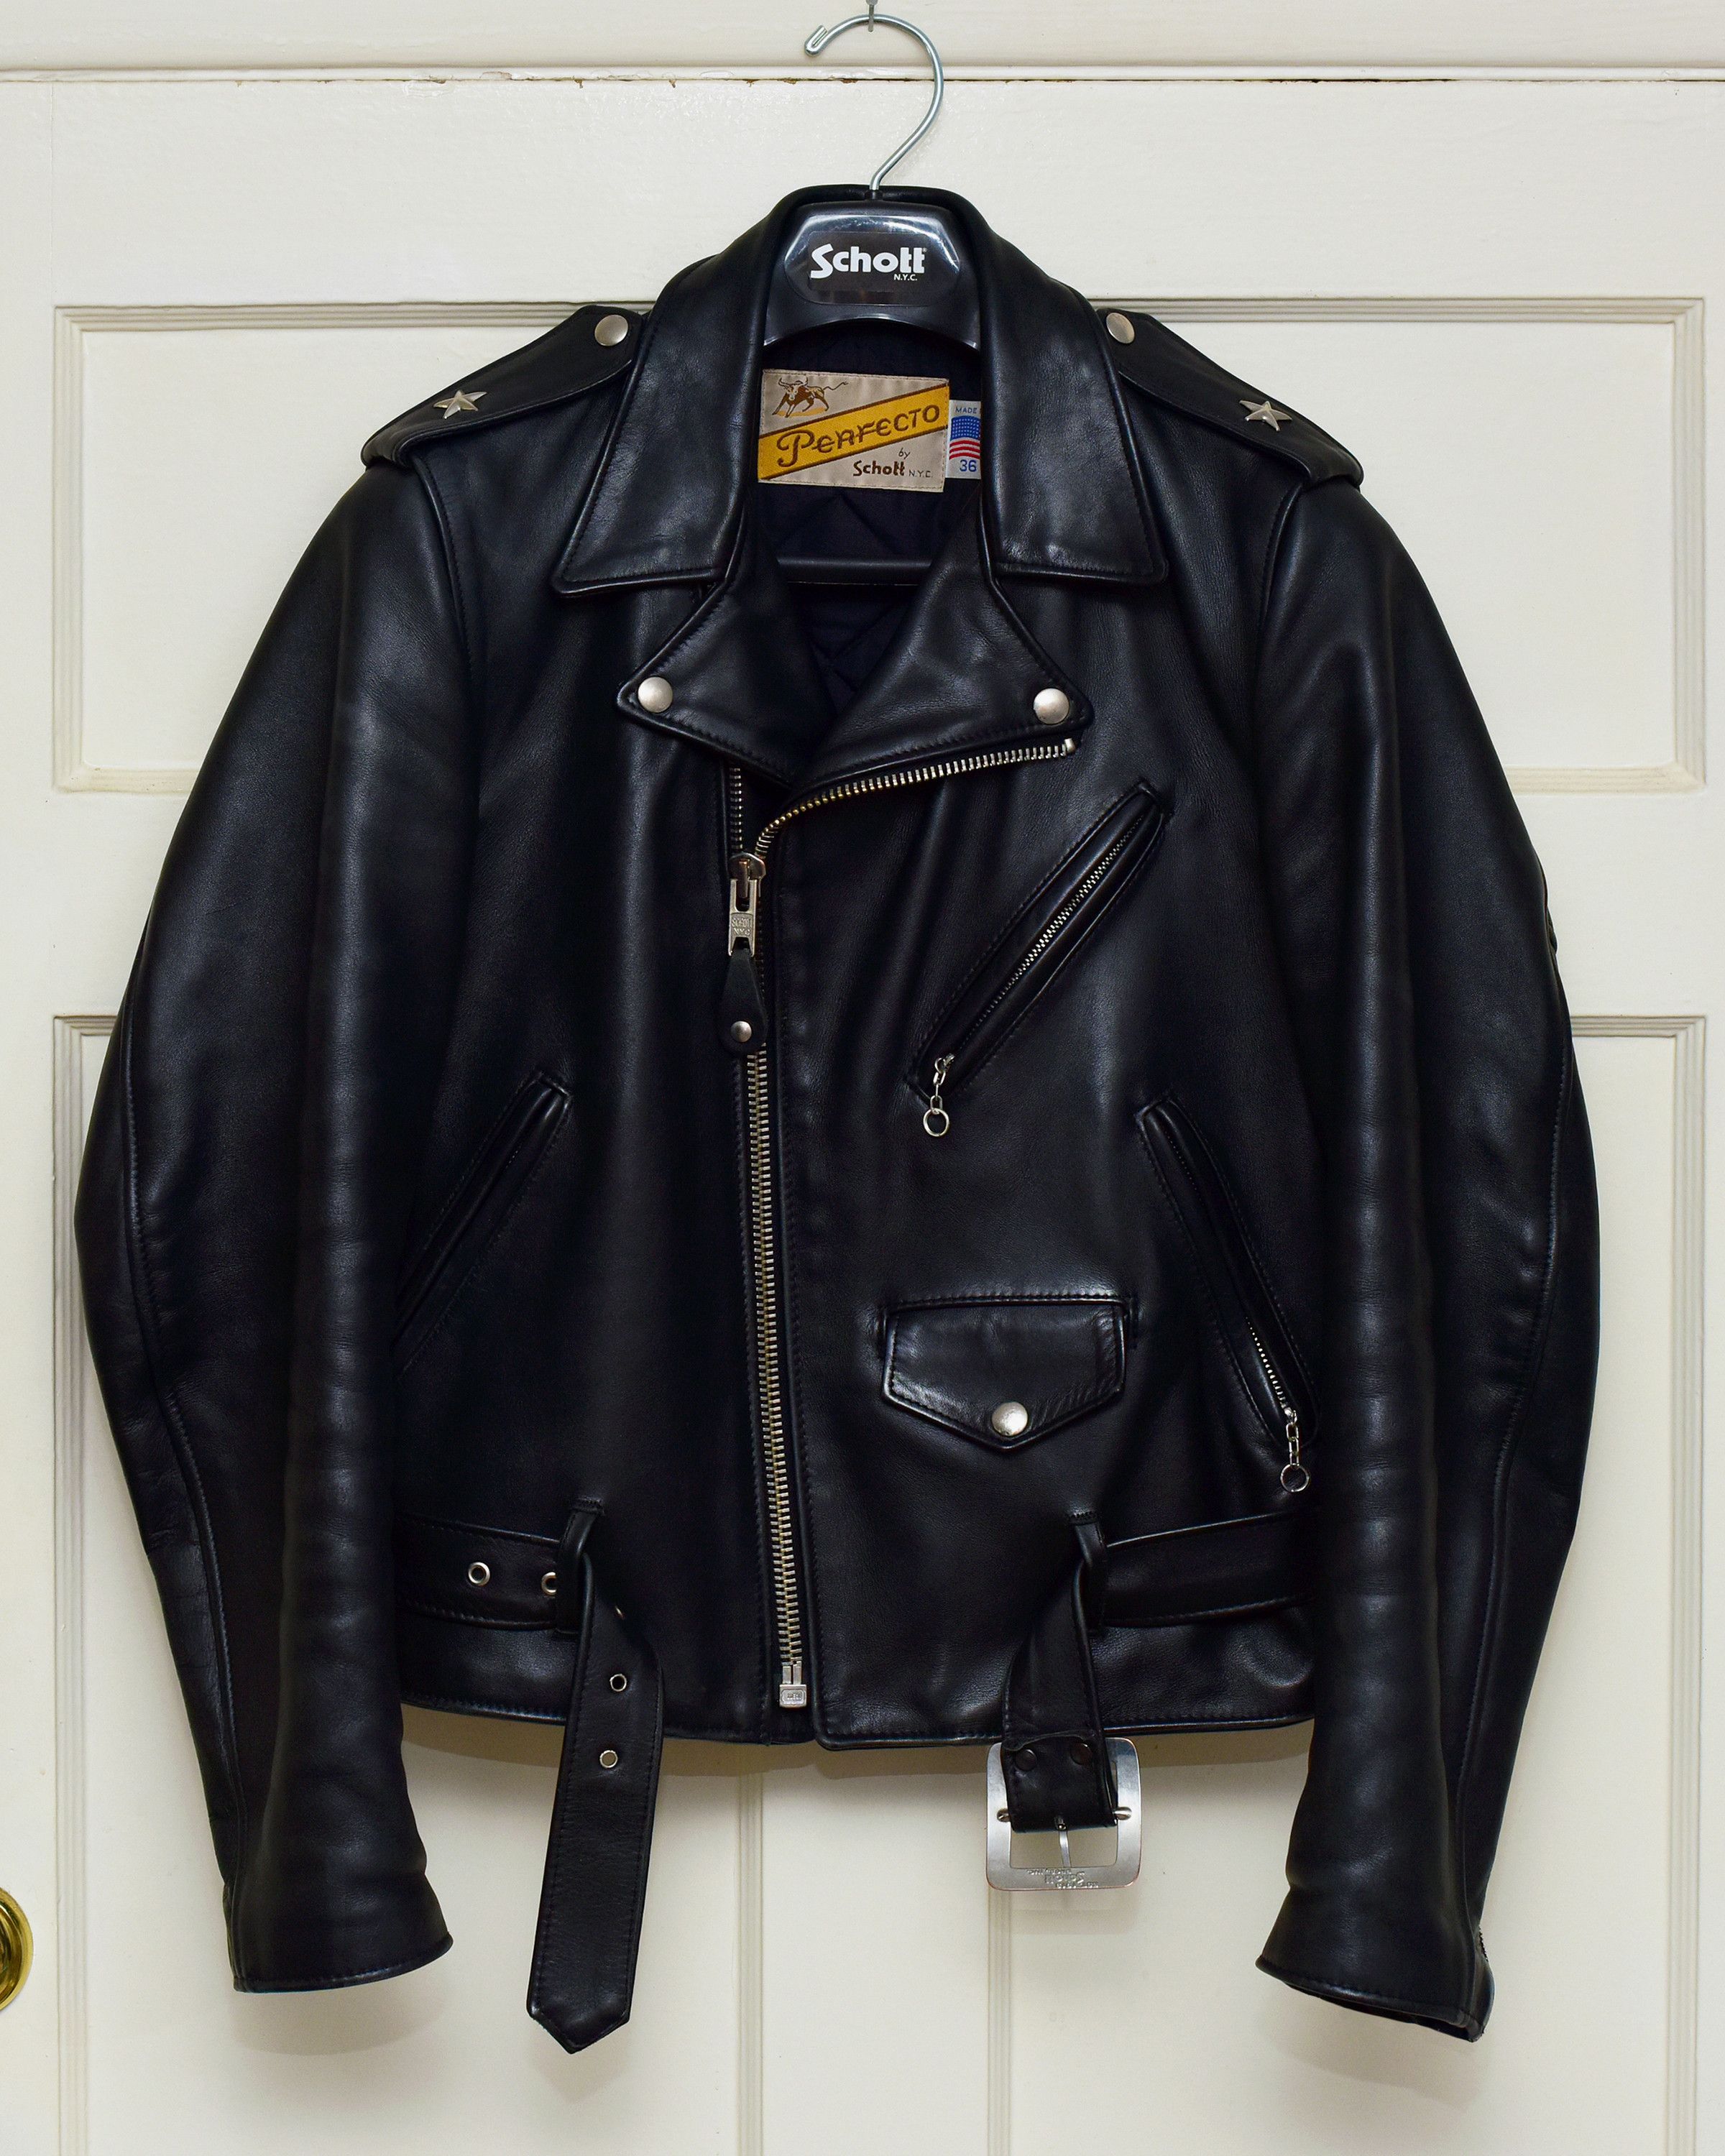 Schott Schott 613 One Star Perfecto Leather Jacket | Grailed